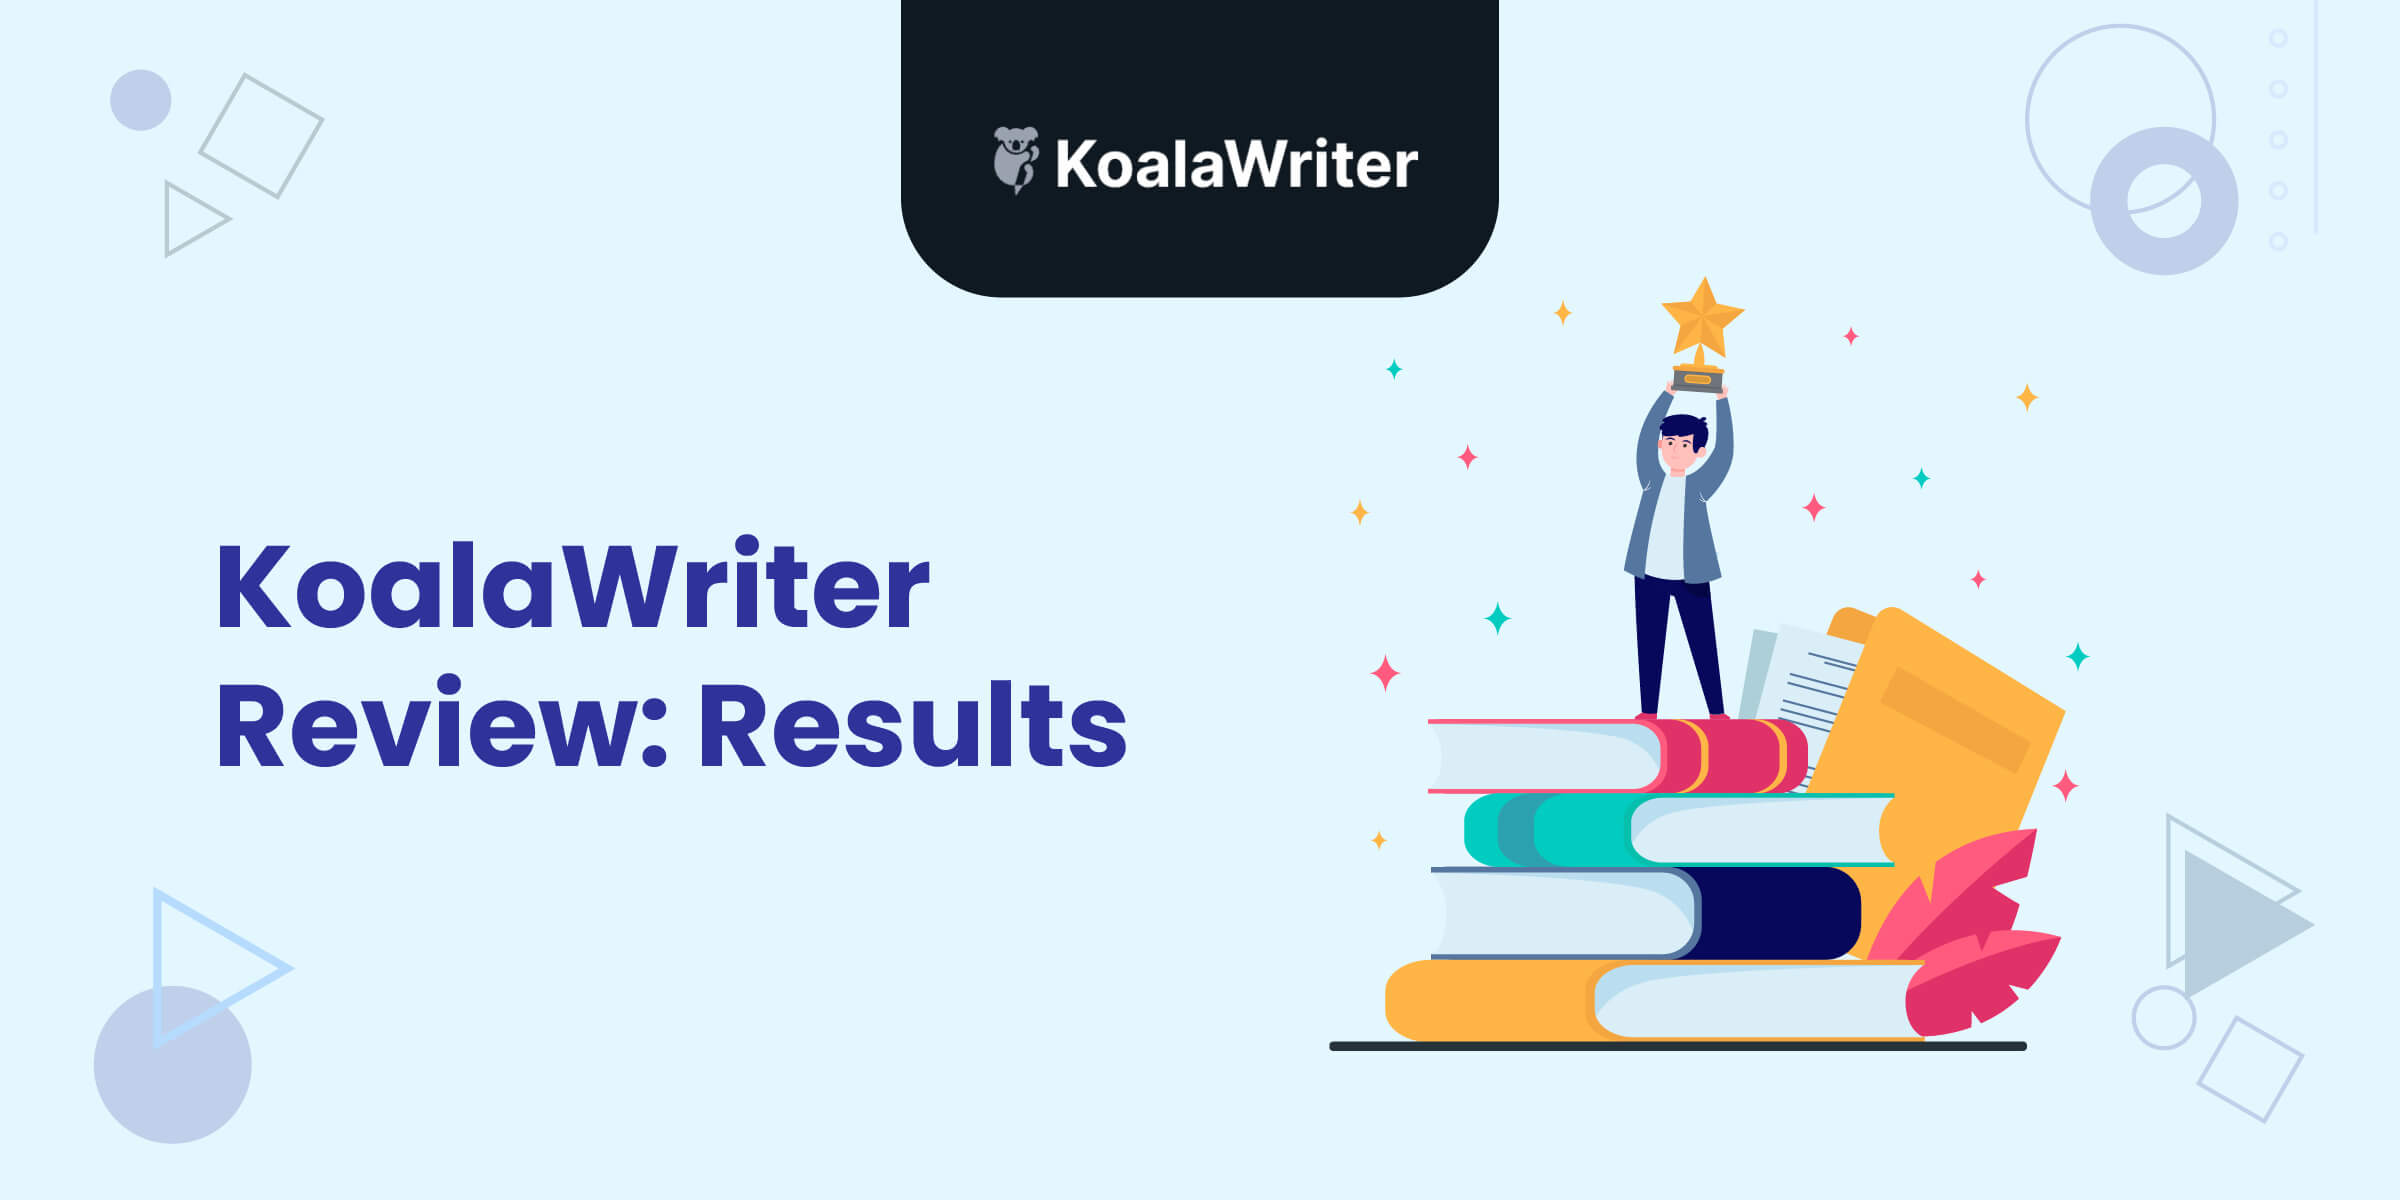 KoalaWriter Review Results